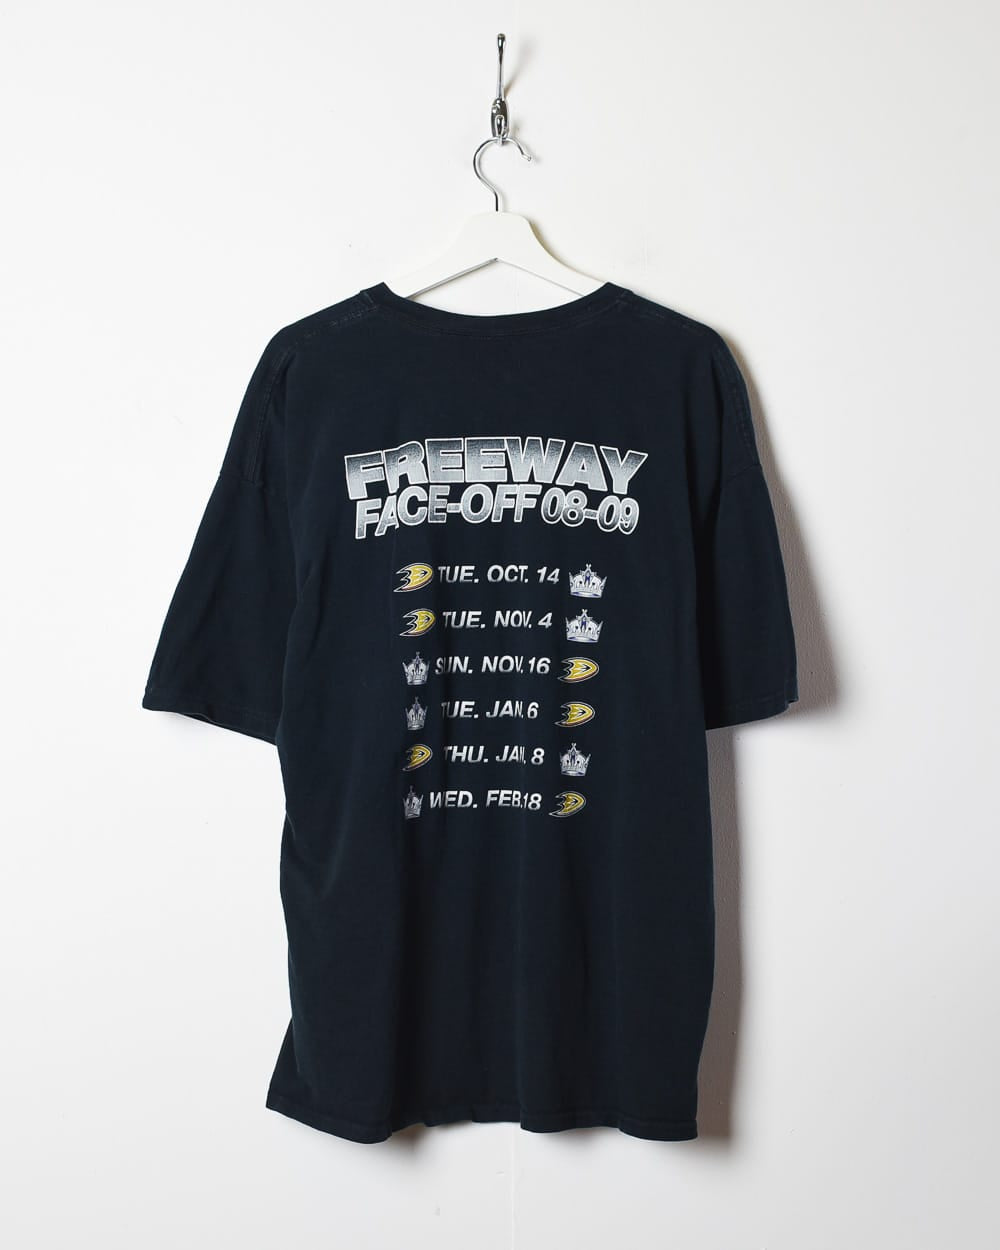 Black NHL Freeway Faceoff Graphic T-Shirt - XX-Large